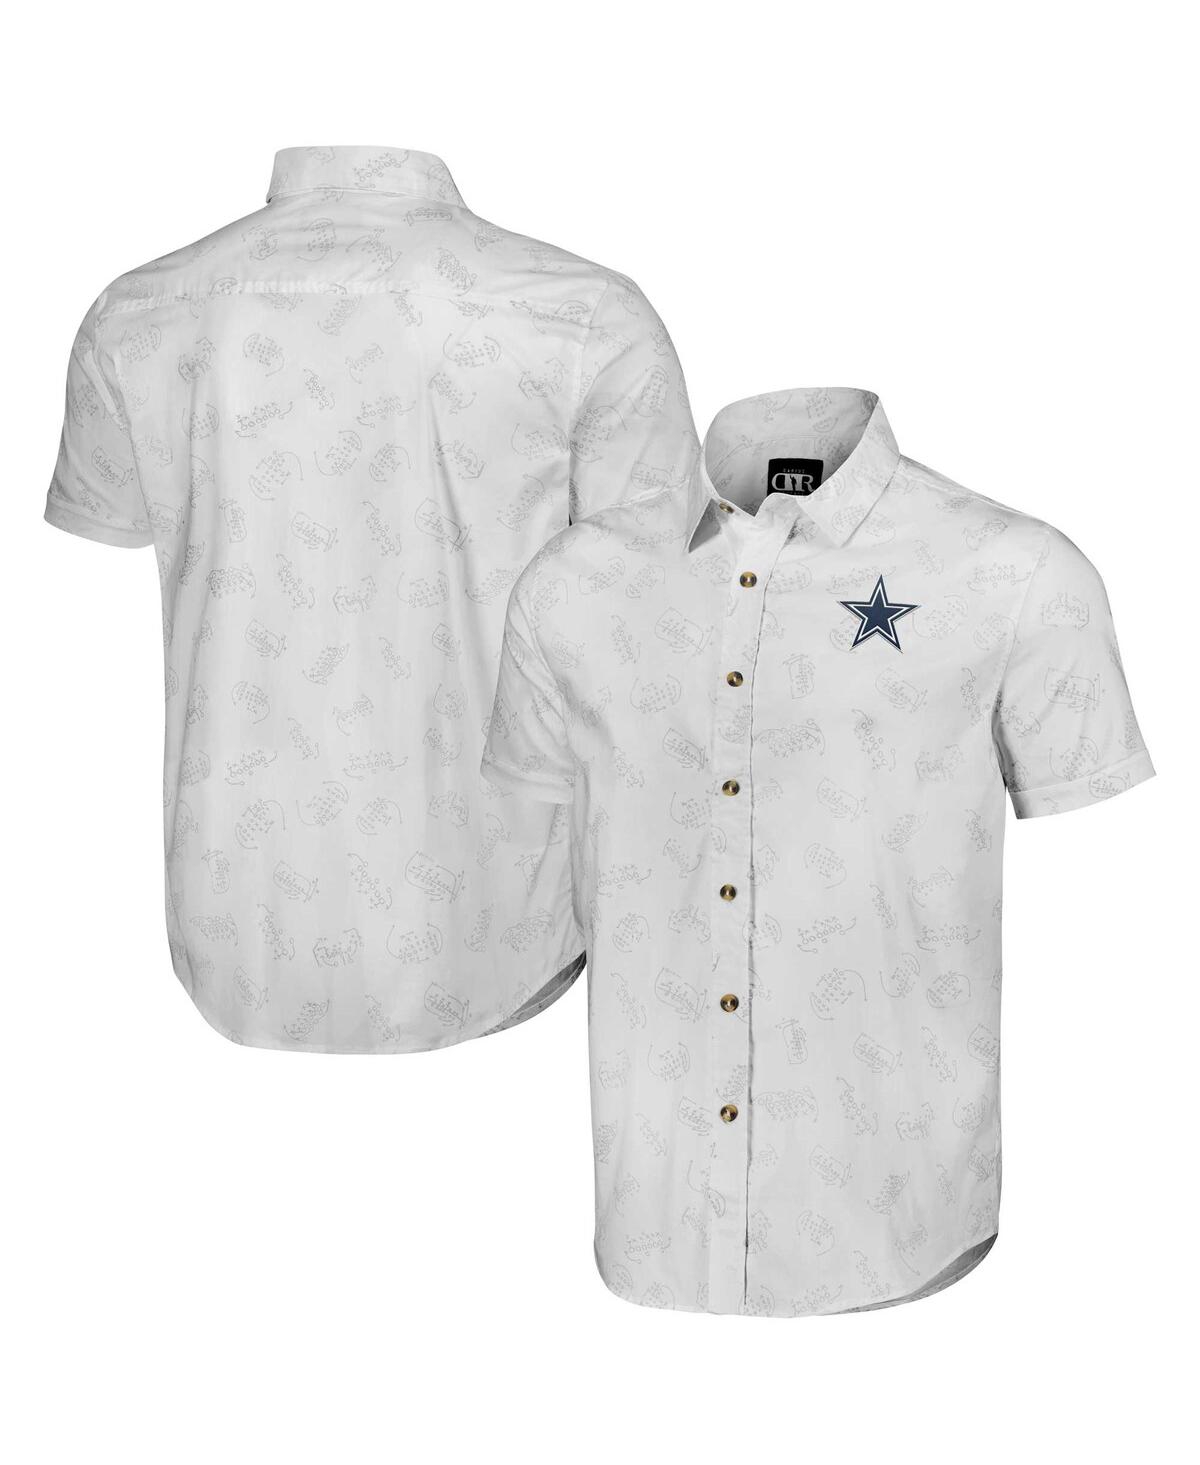 Men's Nfl x Darius Rucker Collection by Fanatics White Dallas Cowboys Woven Short Sleeve Button Up Shirt - White